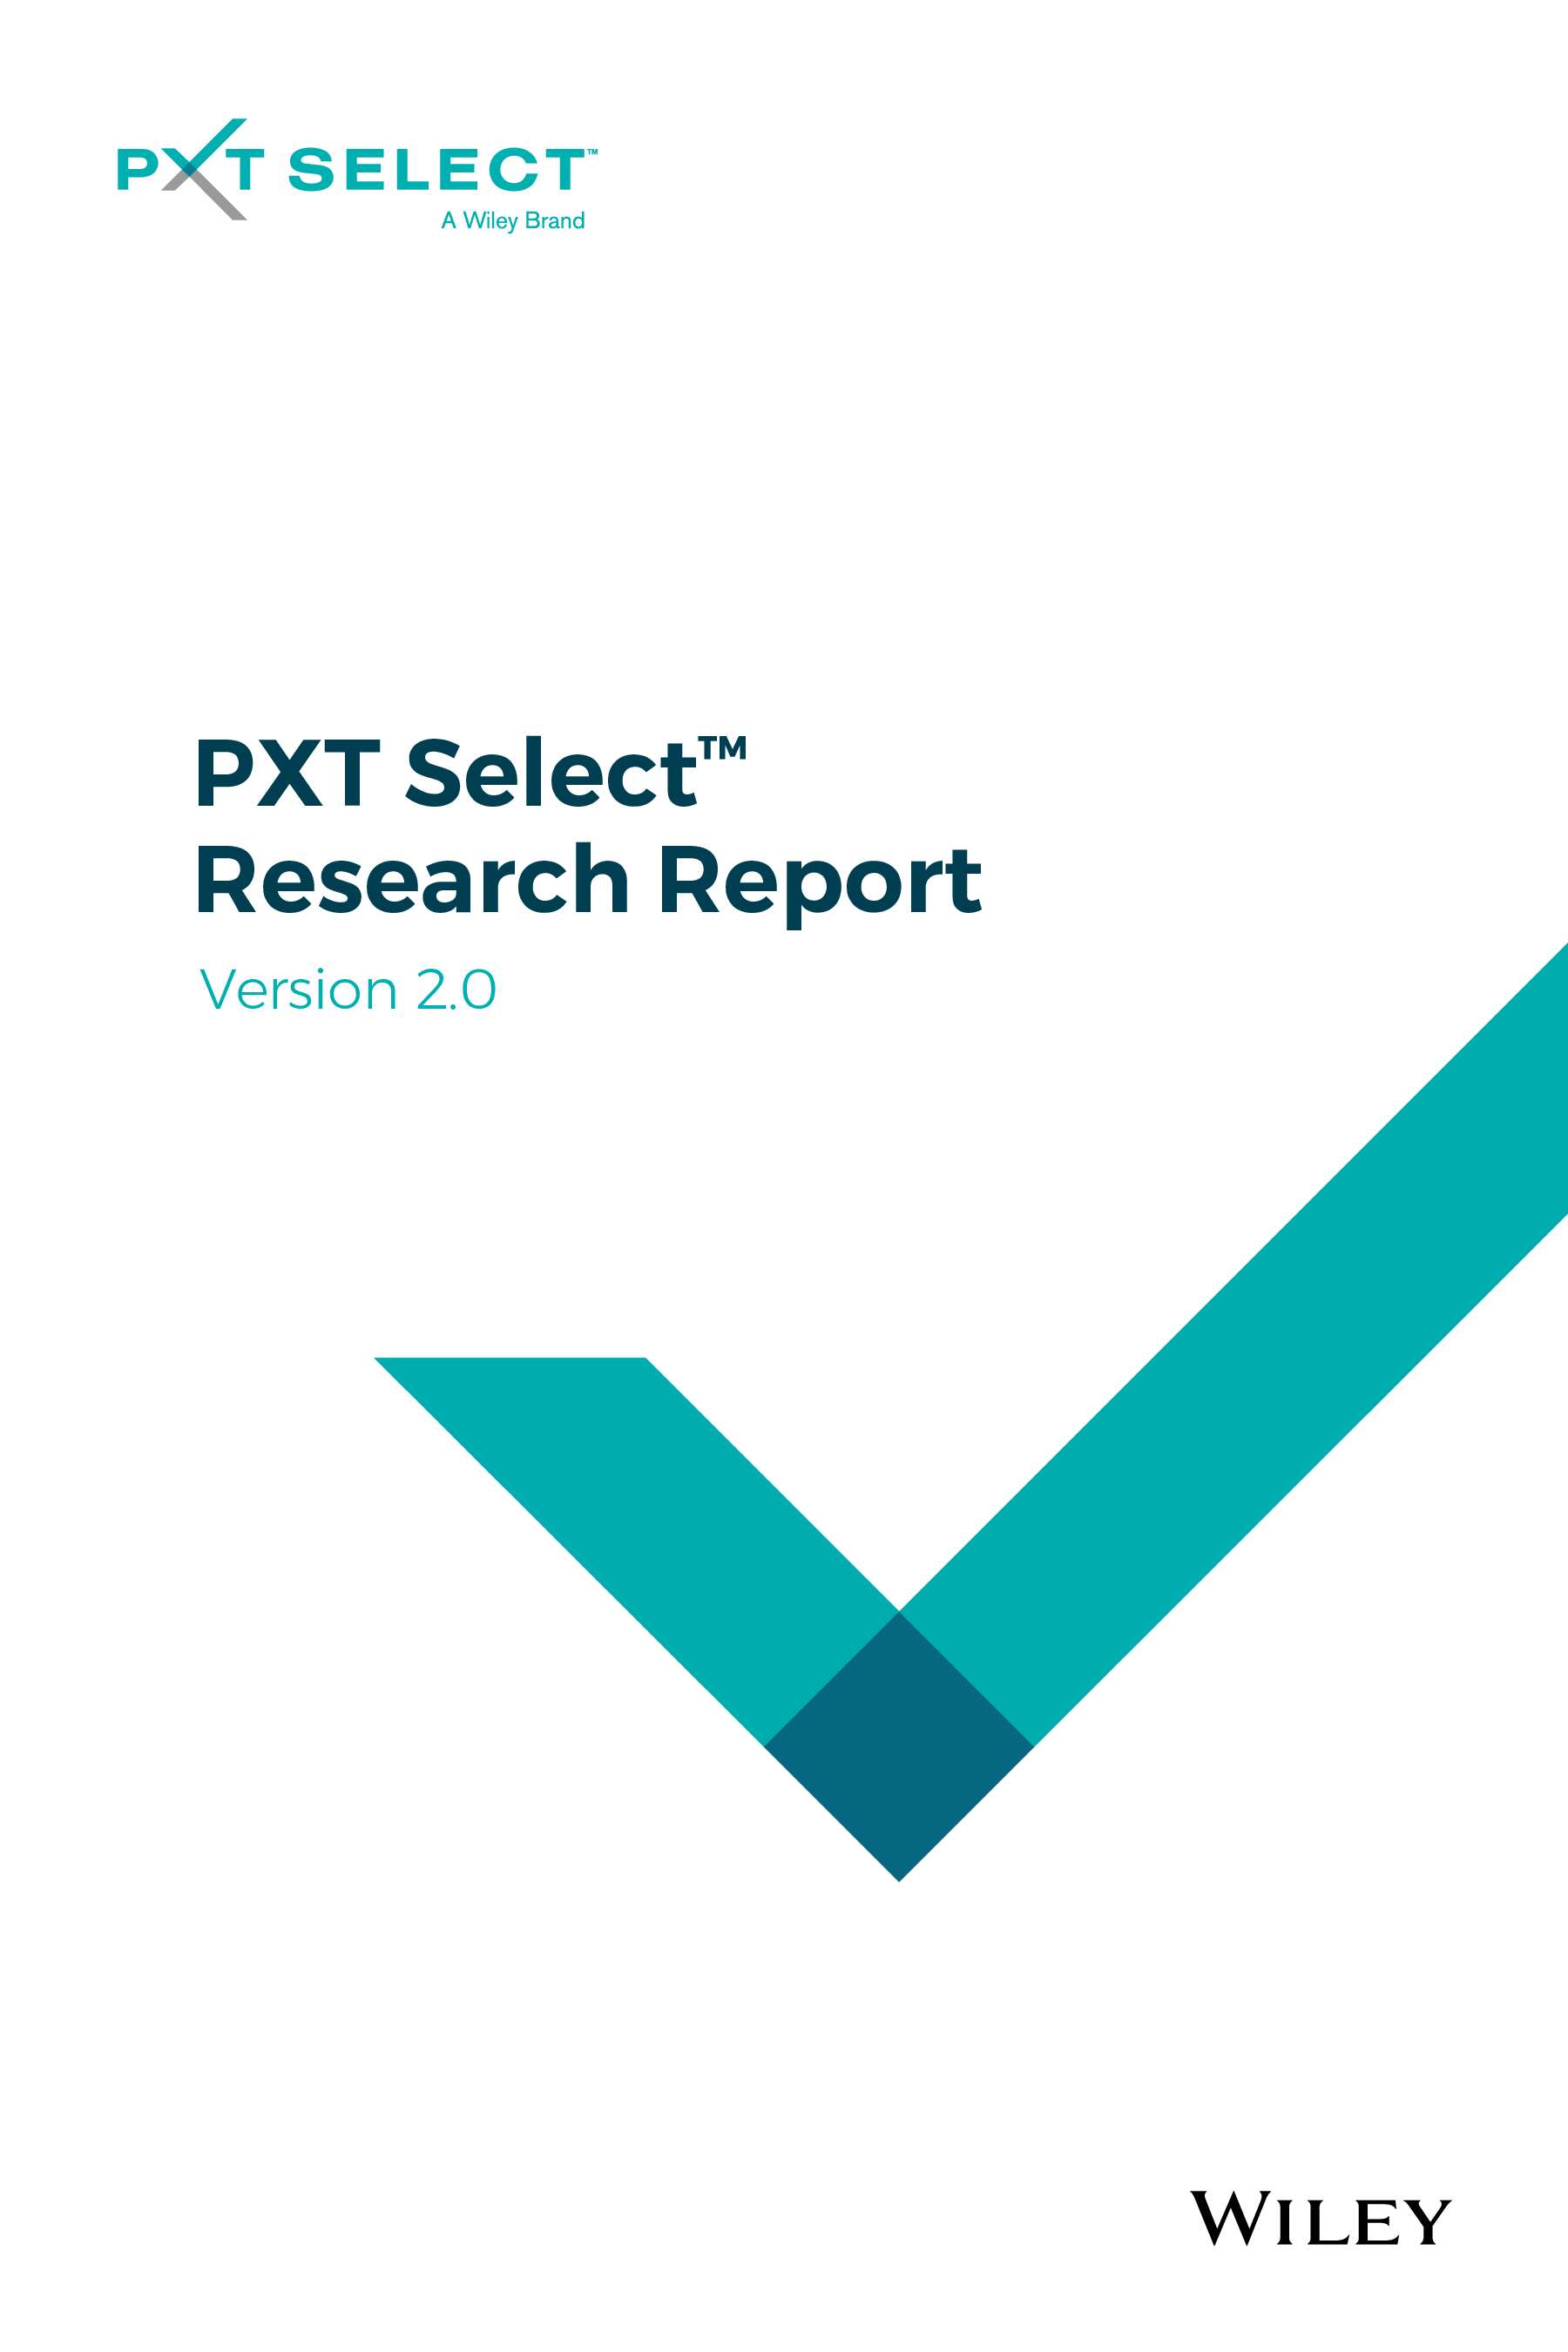 PXT Research Report V2